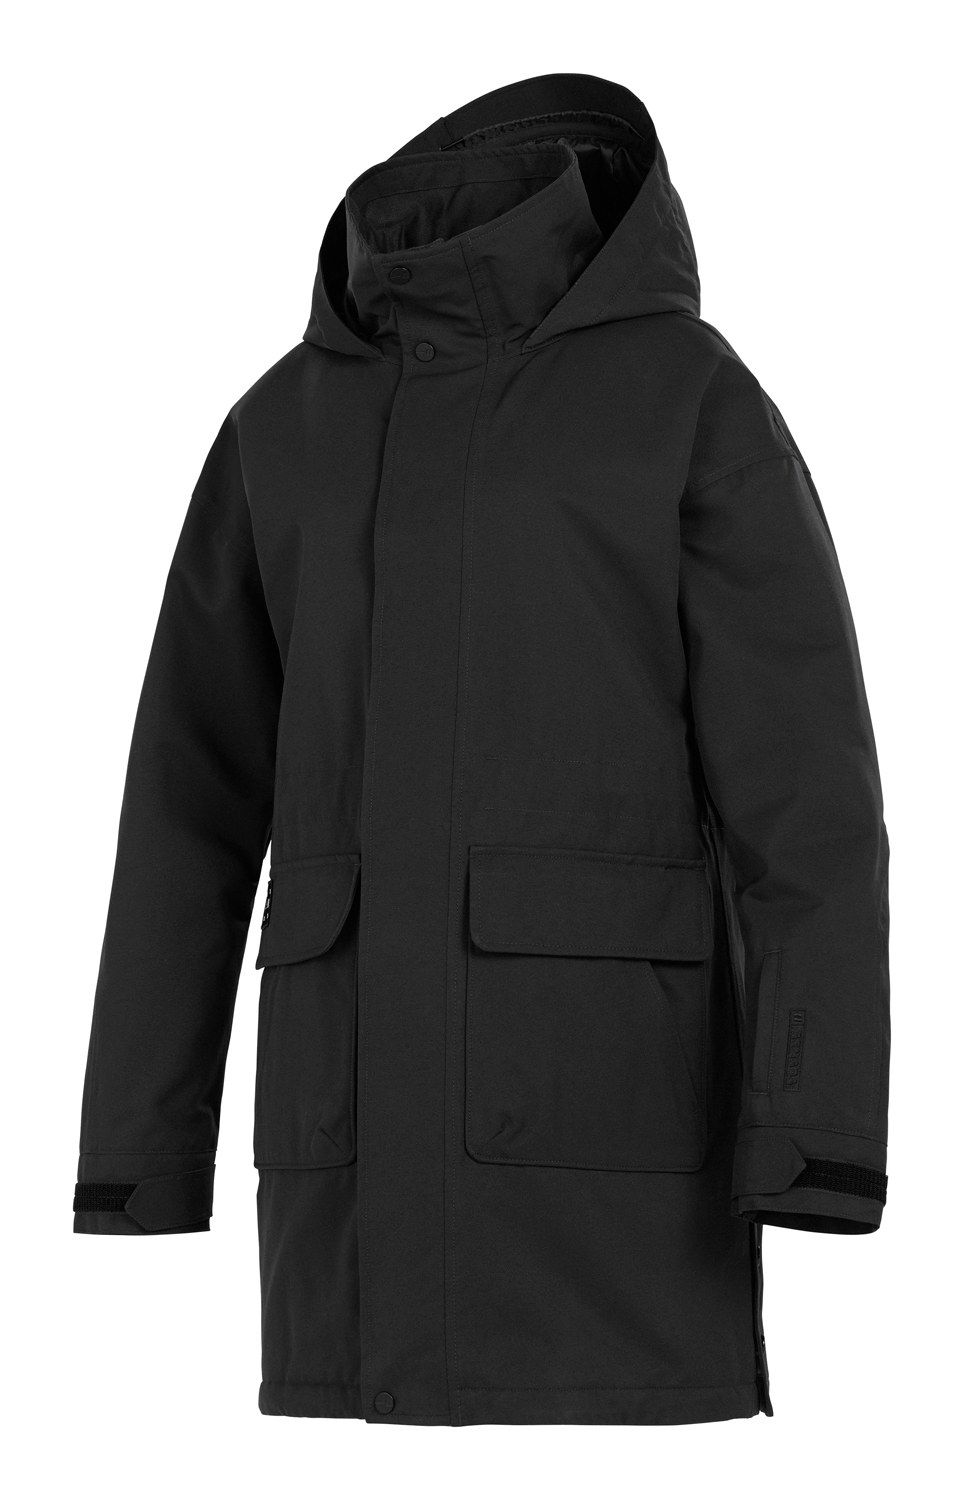 Lunara Insulated Jacket-Black | armadaskis.jp